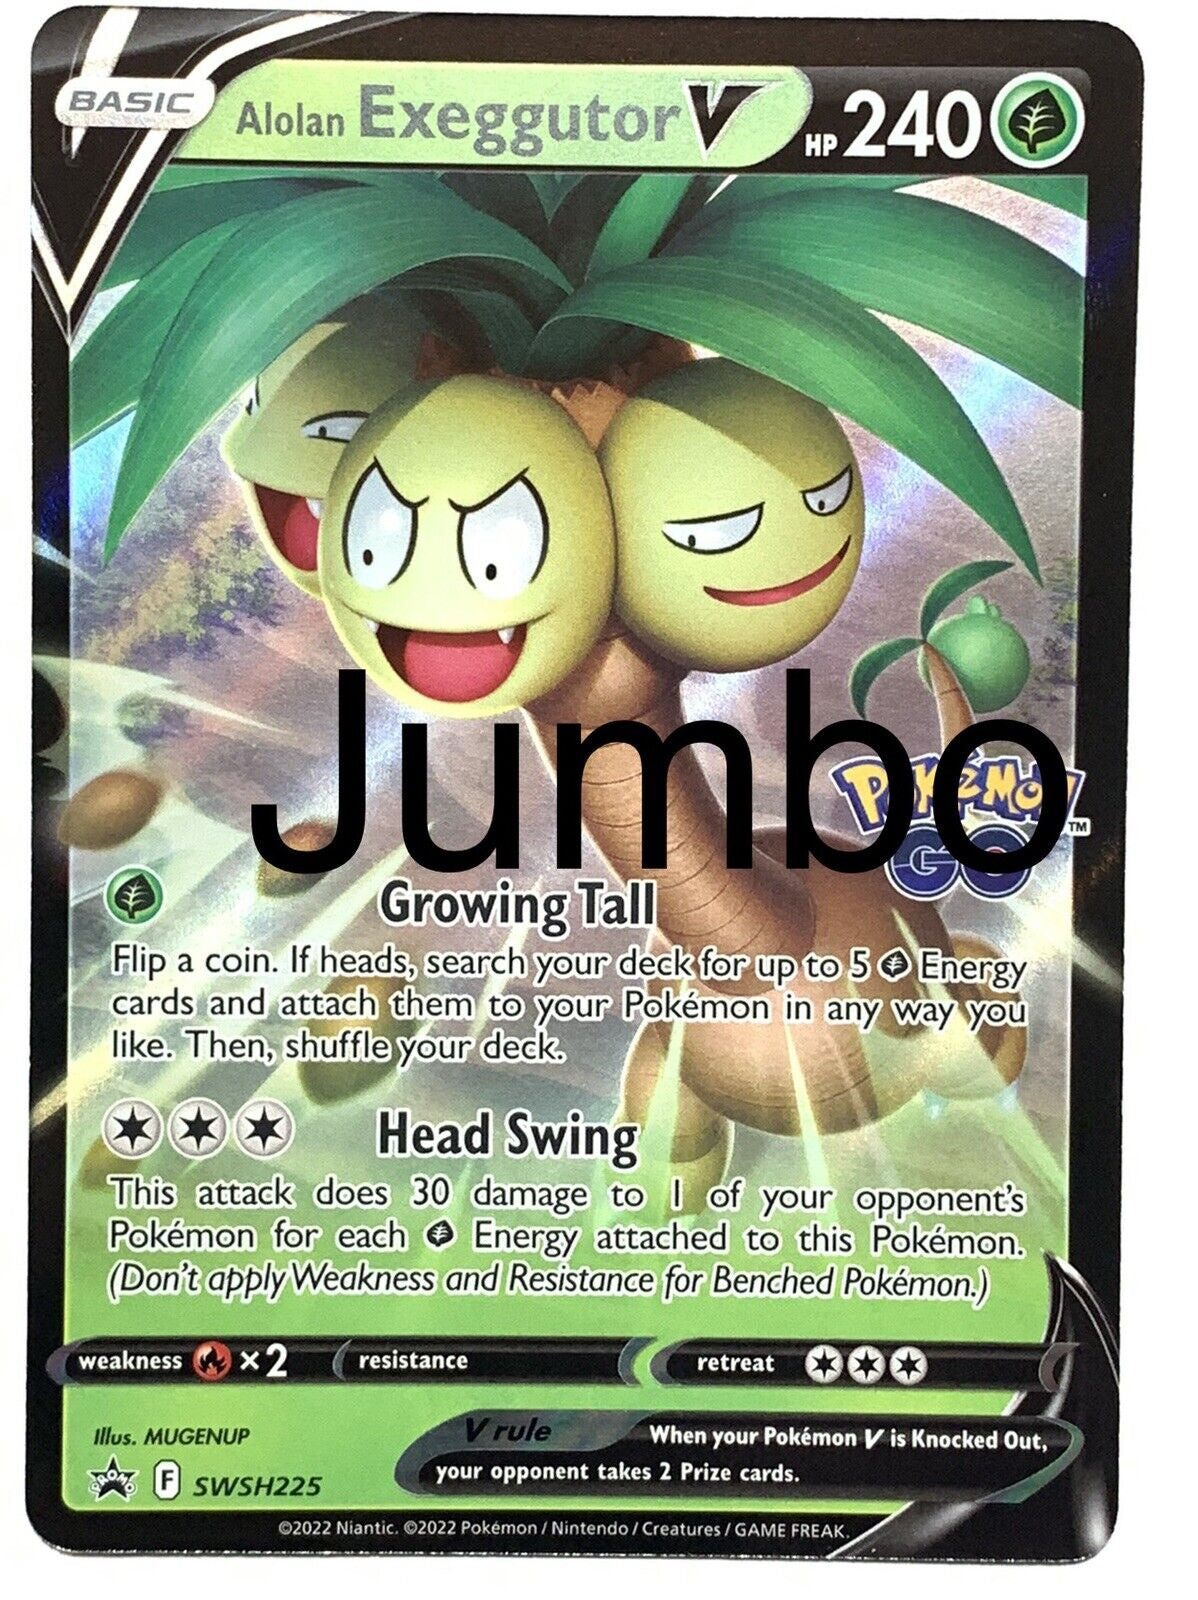 Official Alolan Exeggutor Pokémon Pin (Jumbo)